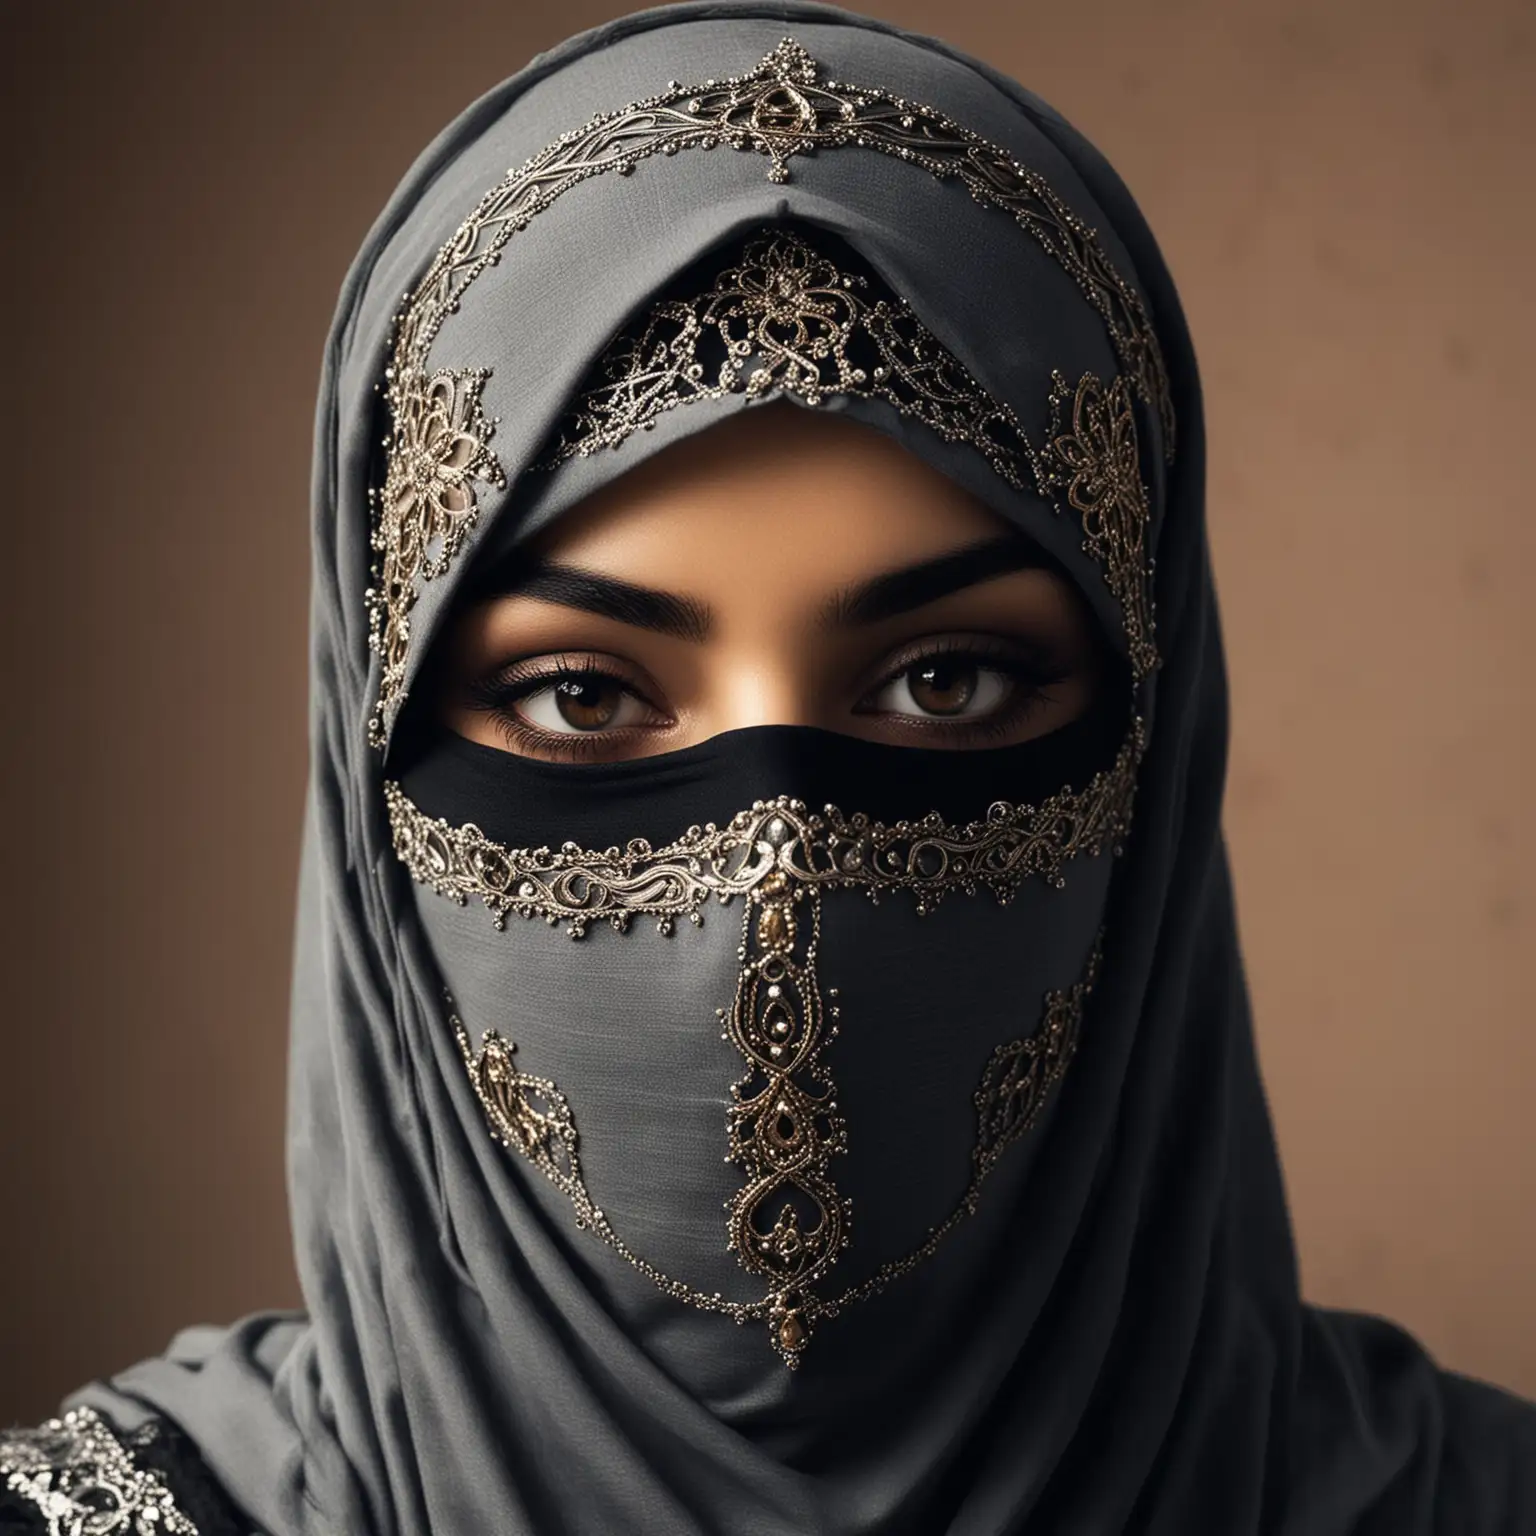 Traditional Arabic Woman in Niqab Gazing Ahead